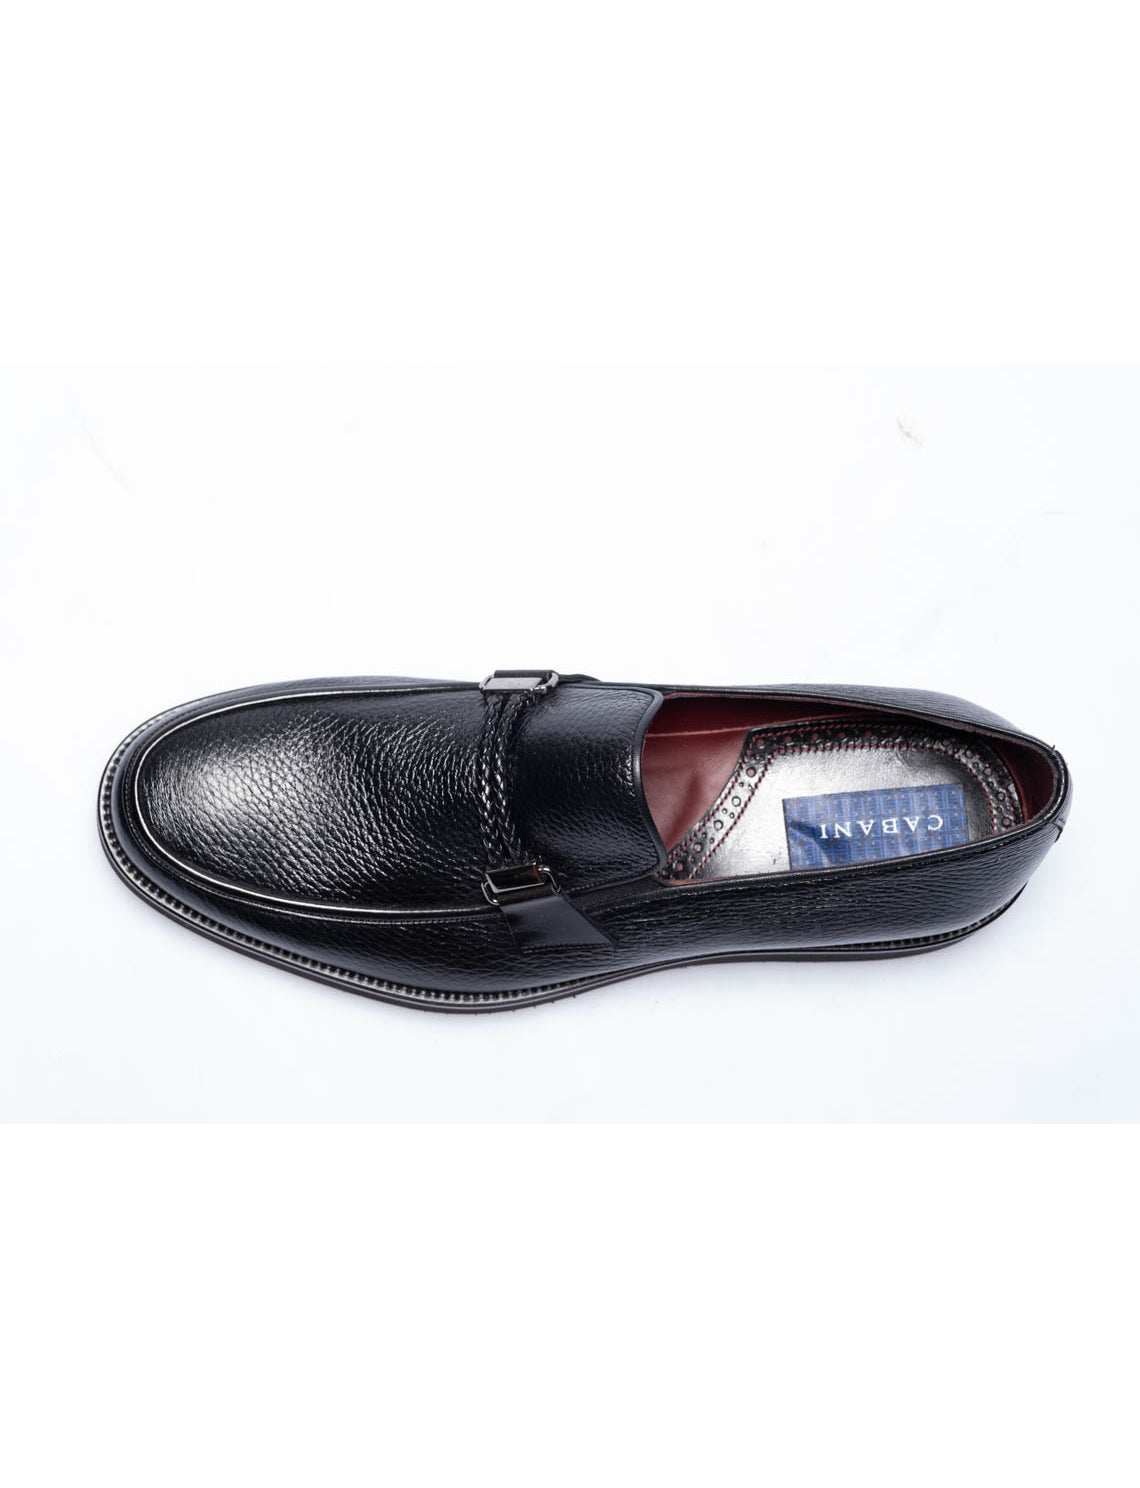 Men  Black Genuine Leather Classic Shoes